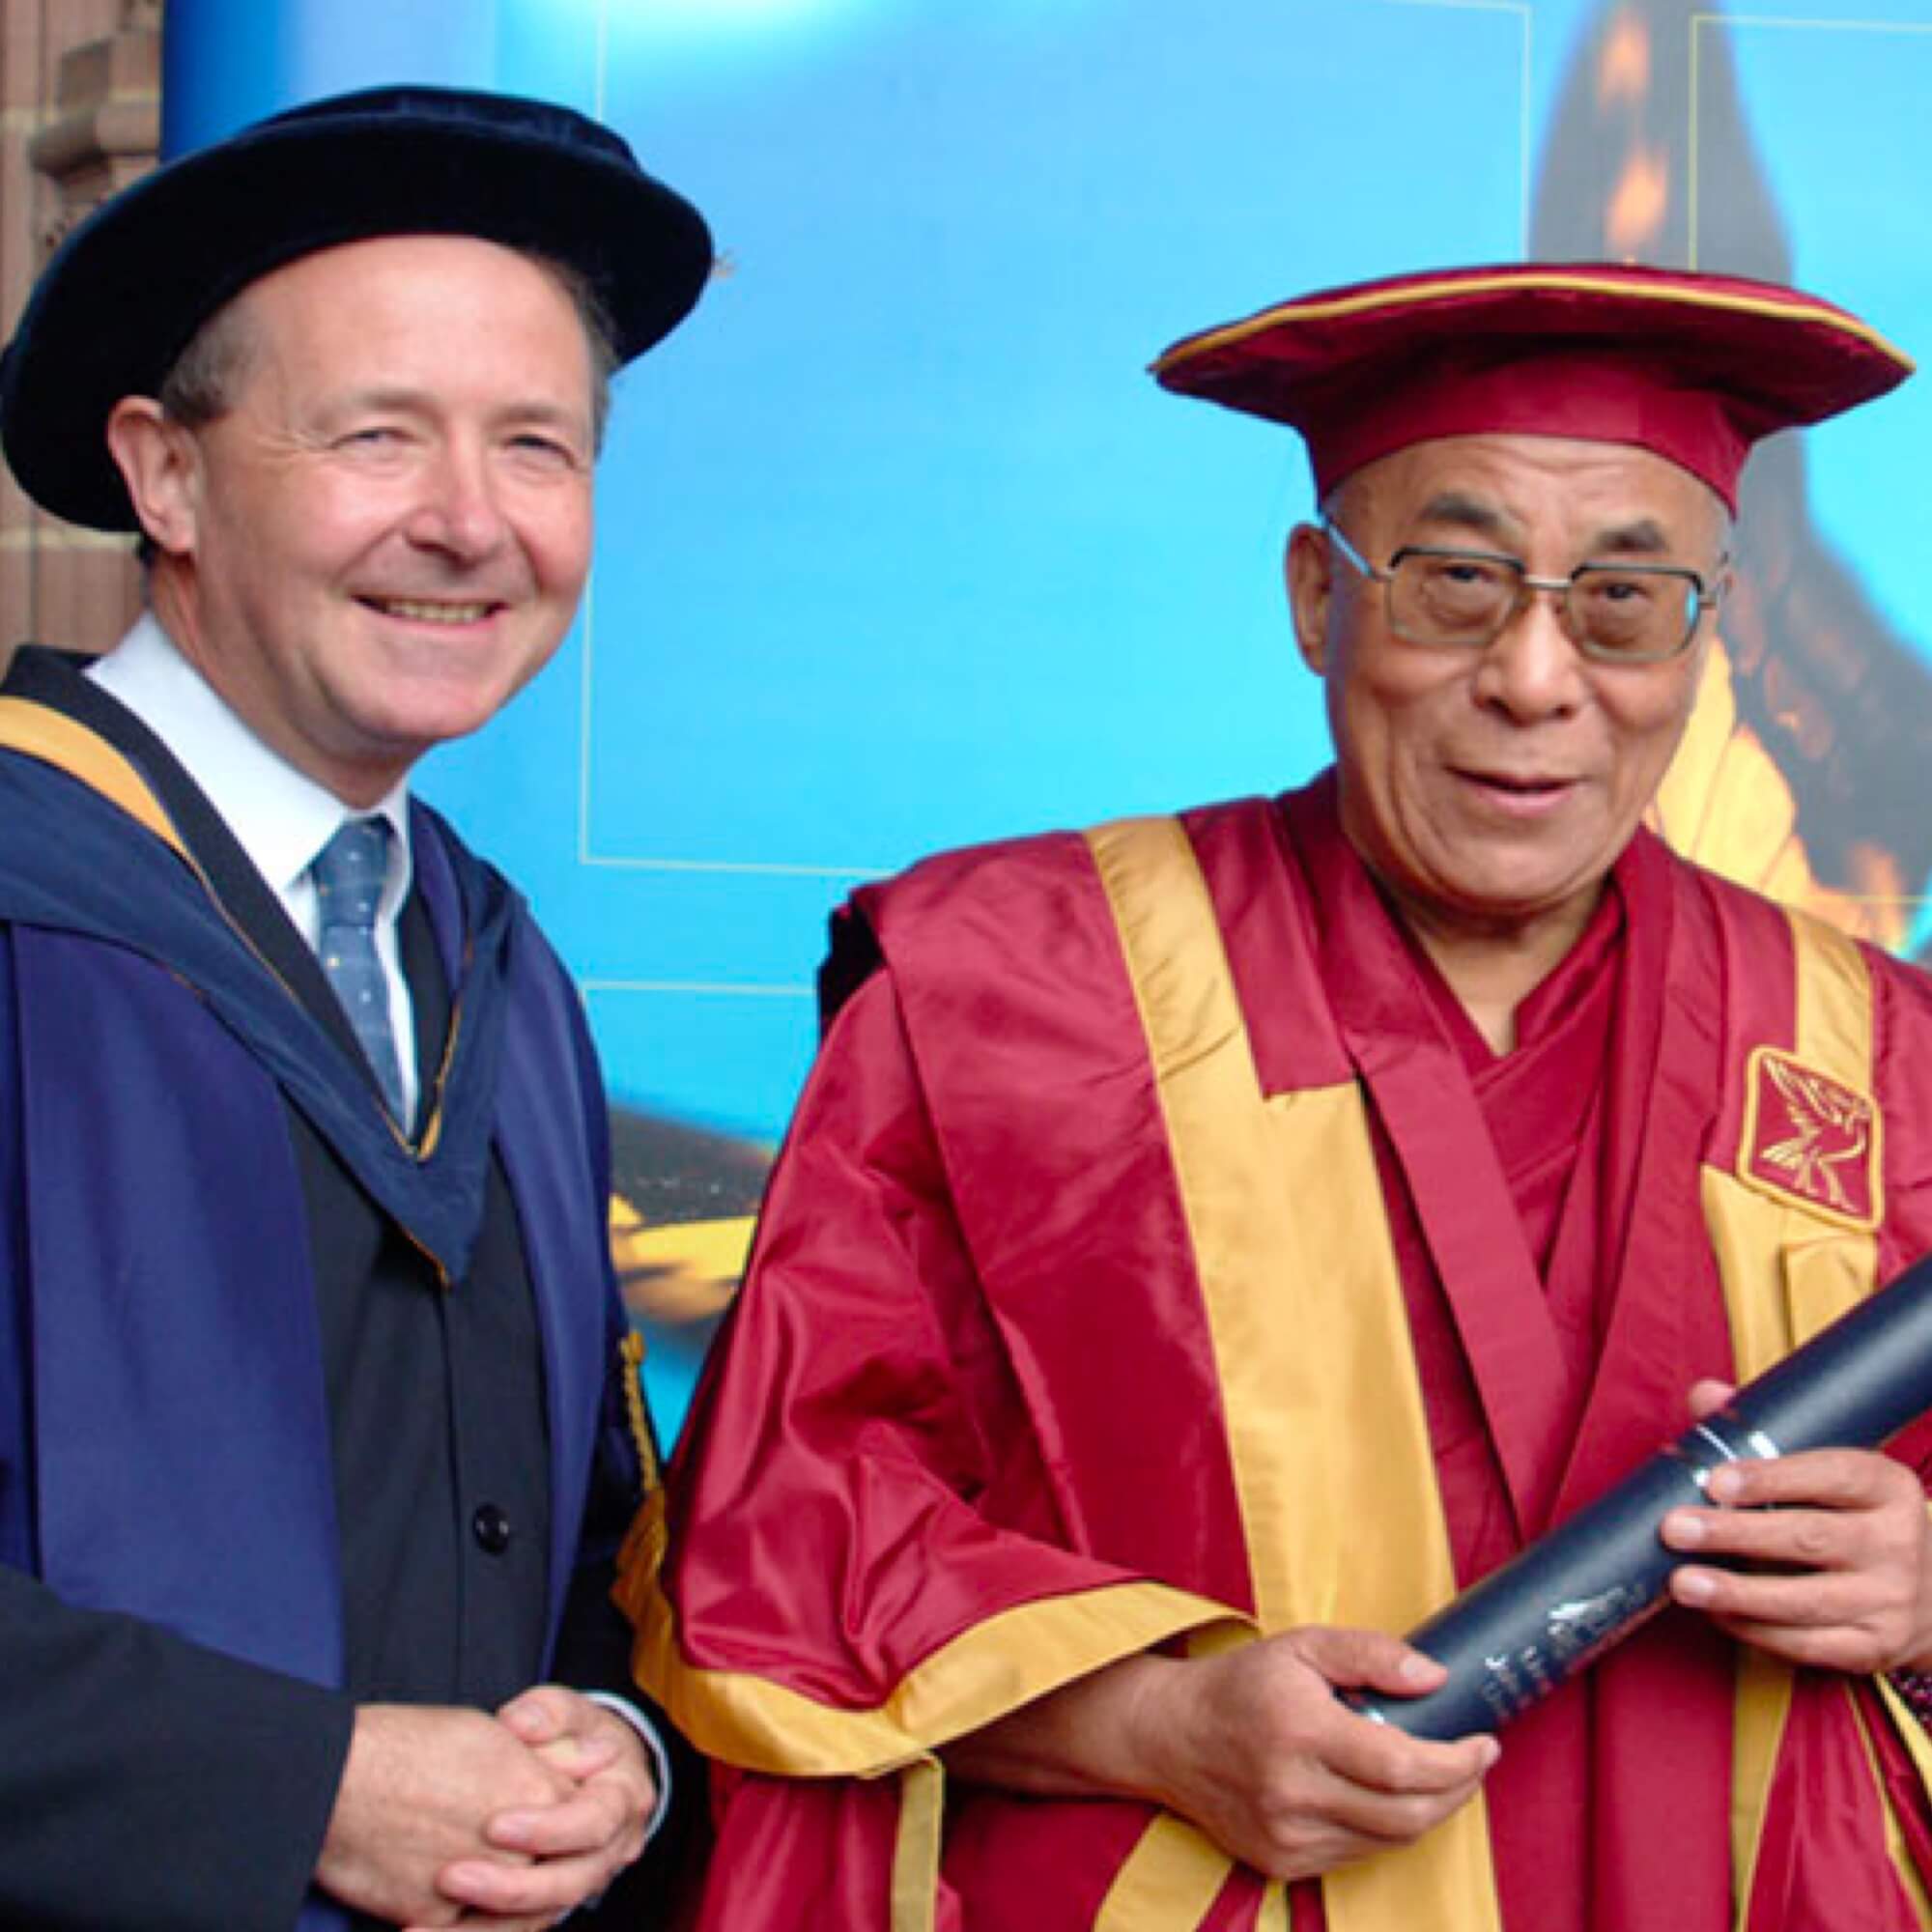 Lord Alton with the Dali Lama